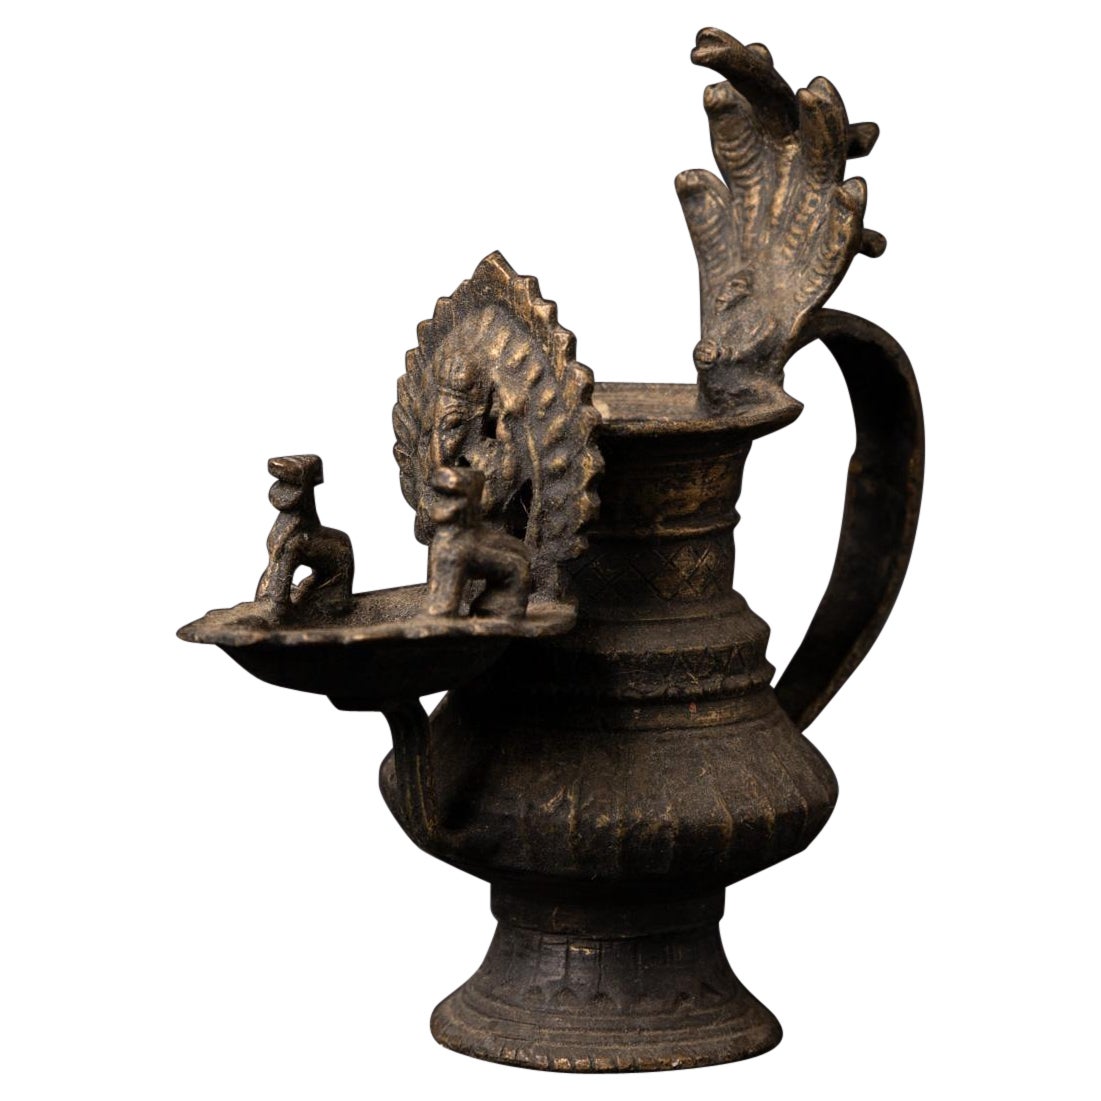 19th century antique bronze Nepali Oil lamp (Sukunda) with Ganesh statue